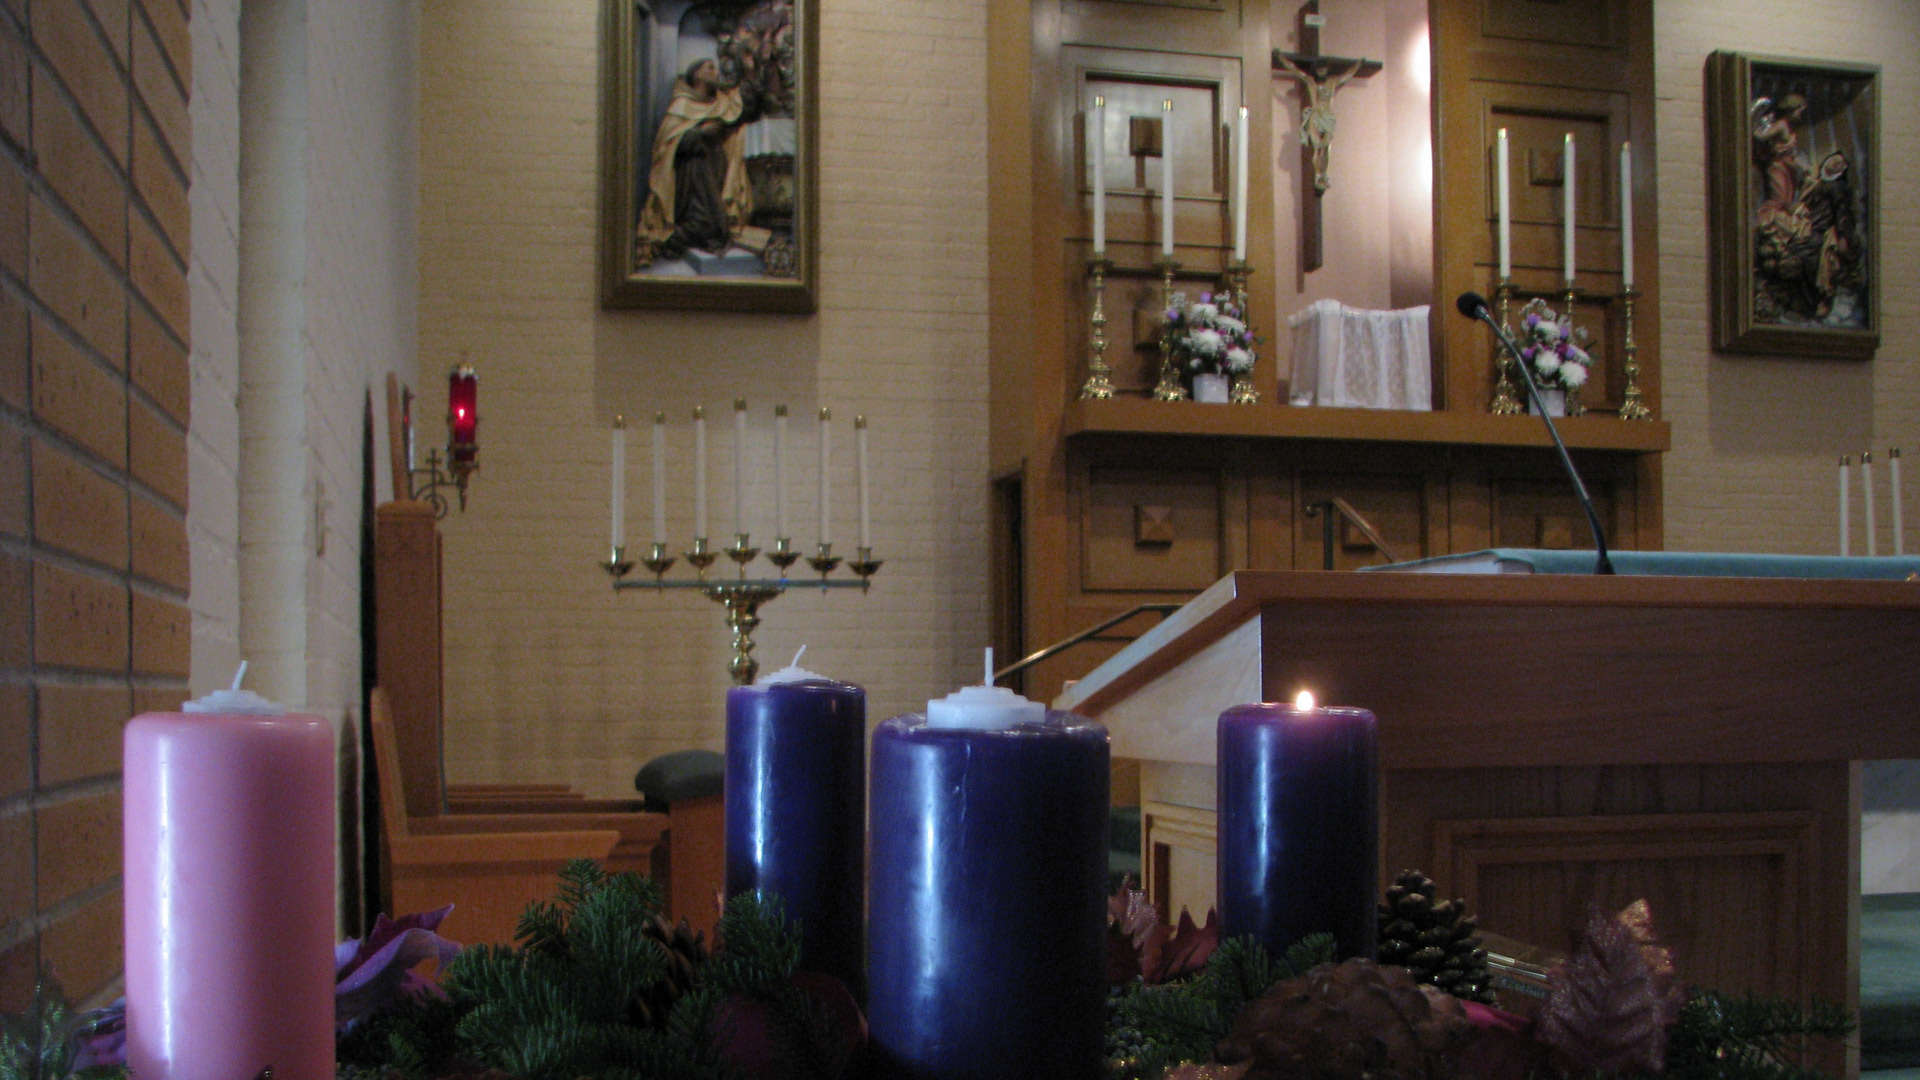 Advent wreath in chapel, 1 candel lit